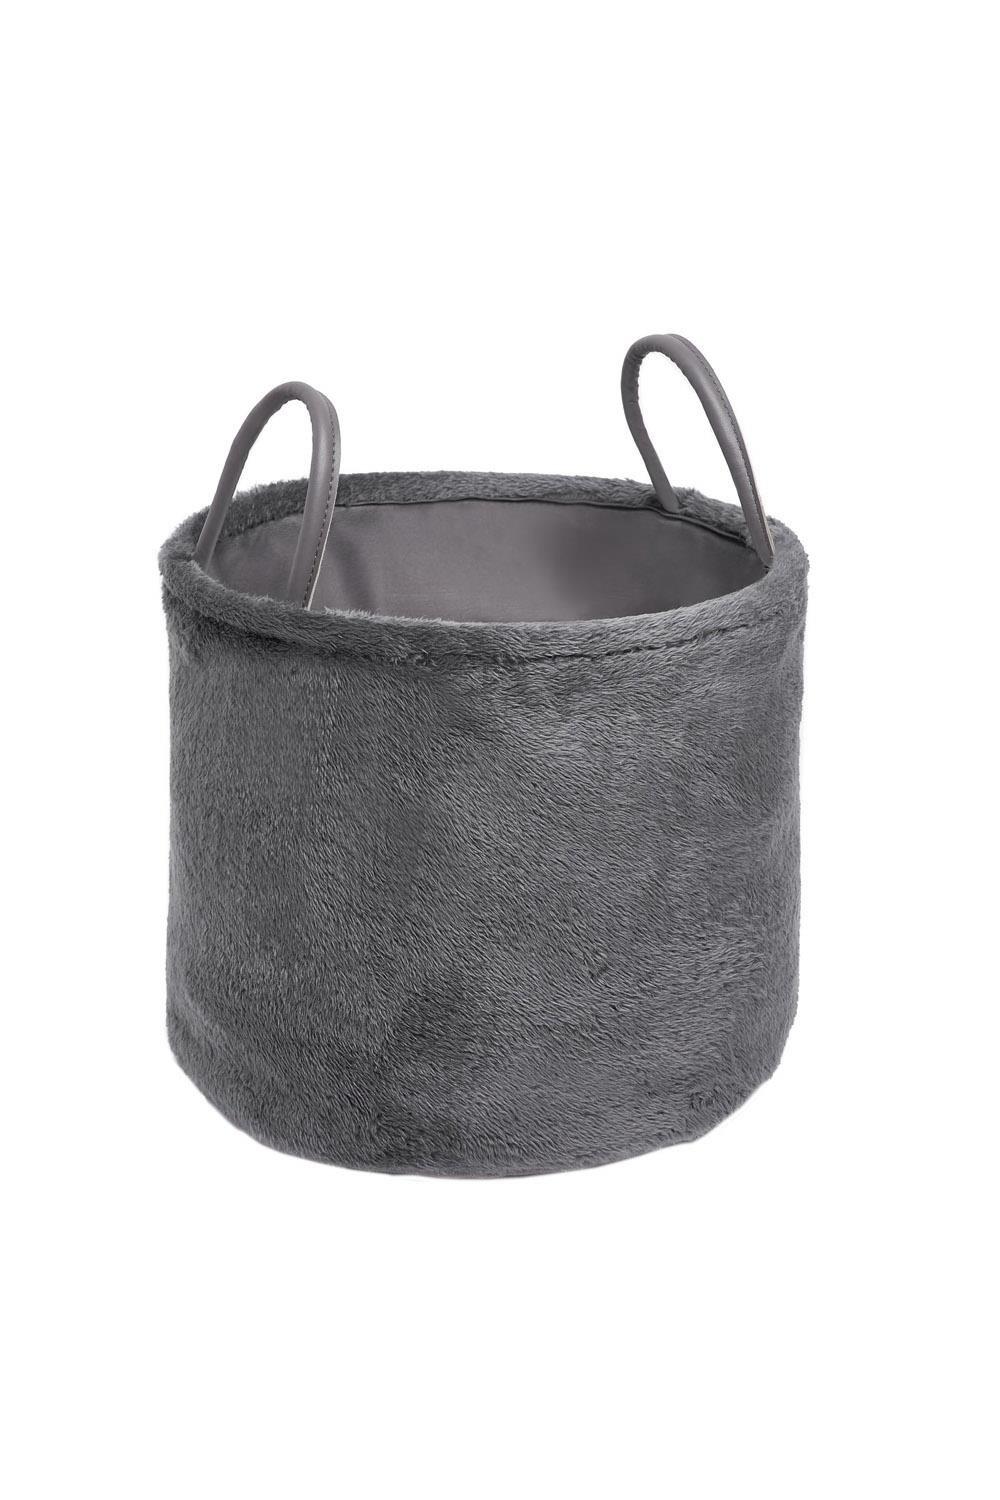 OHS Teddy Fleece Storage Hamper Handles Home Laundry Basket|charcoal